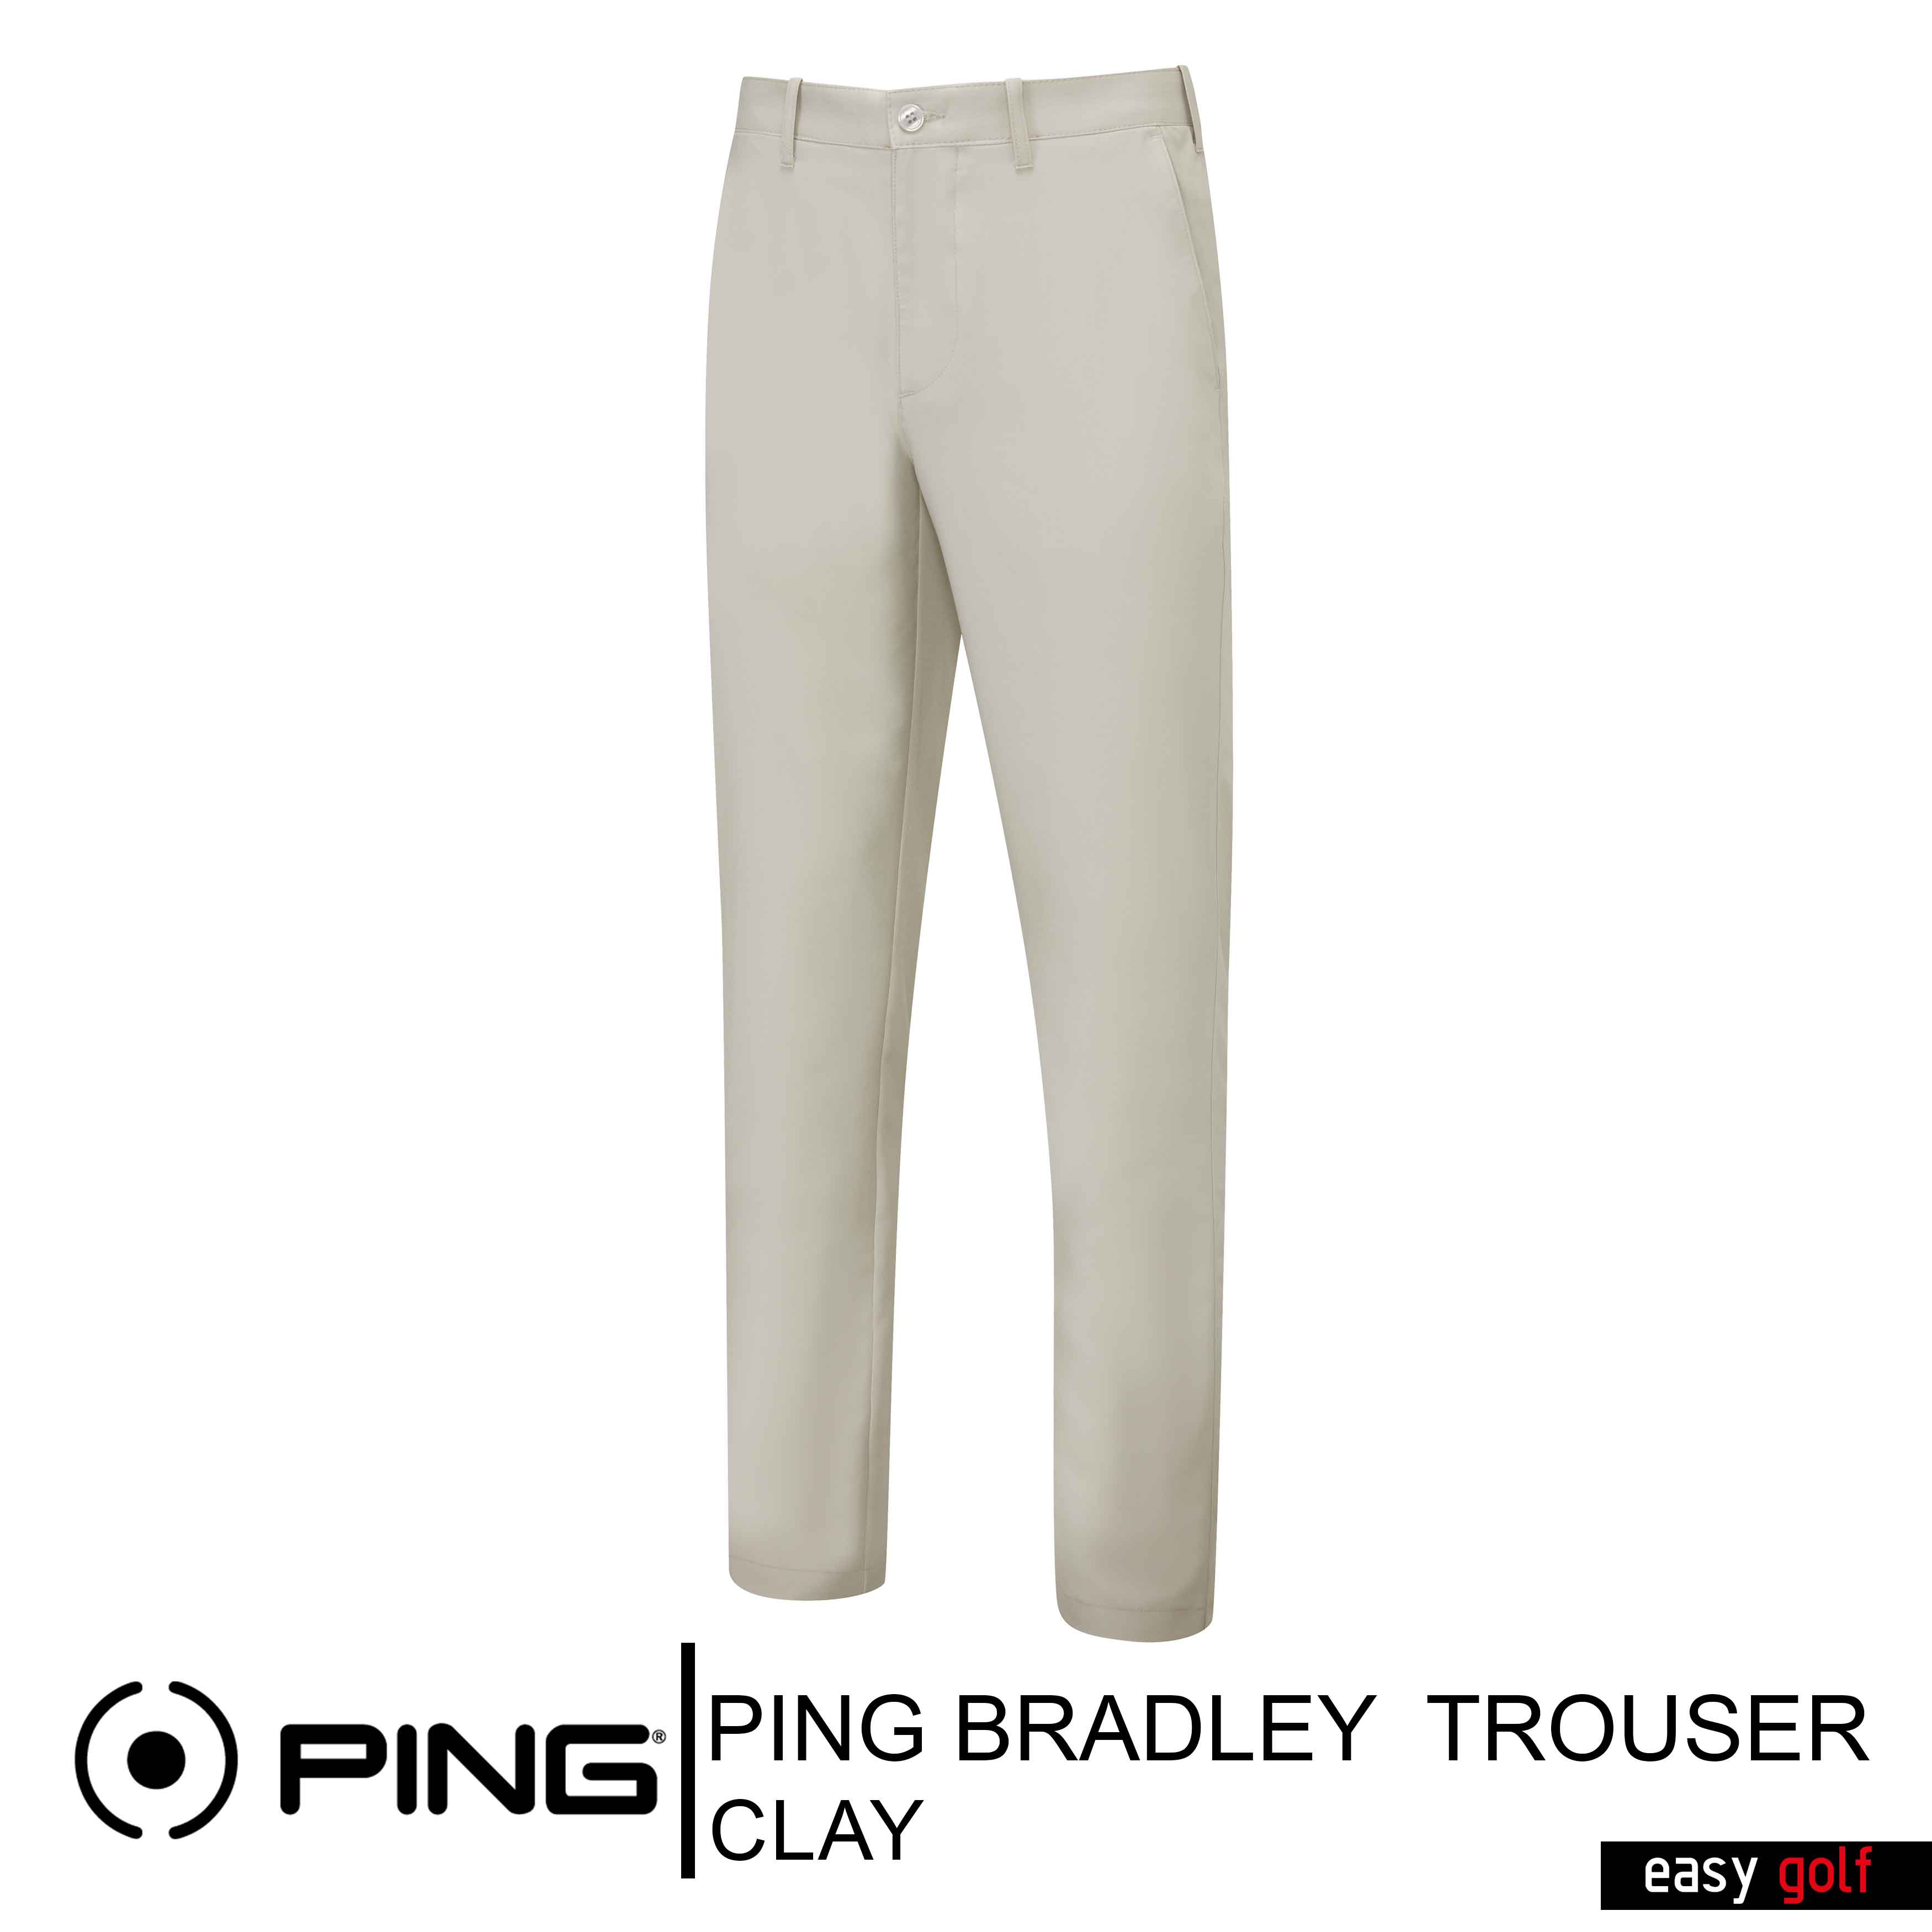 Ping Bradley shorts review - National Club Golfer